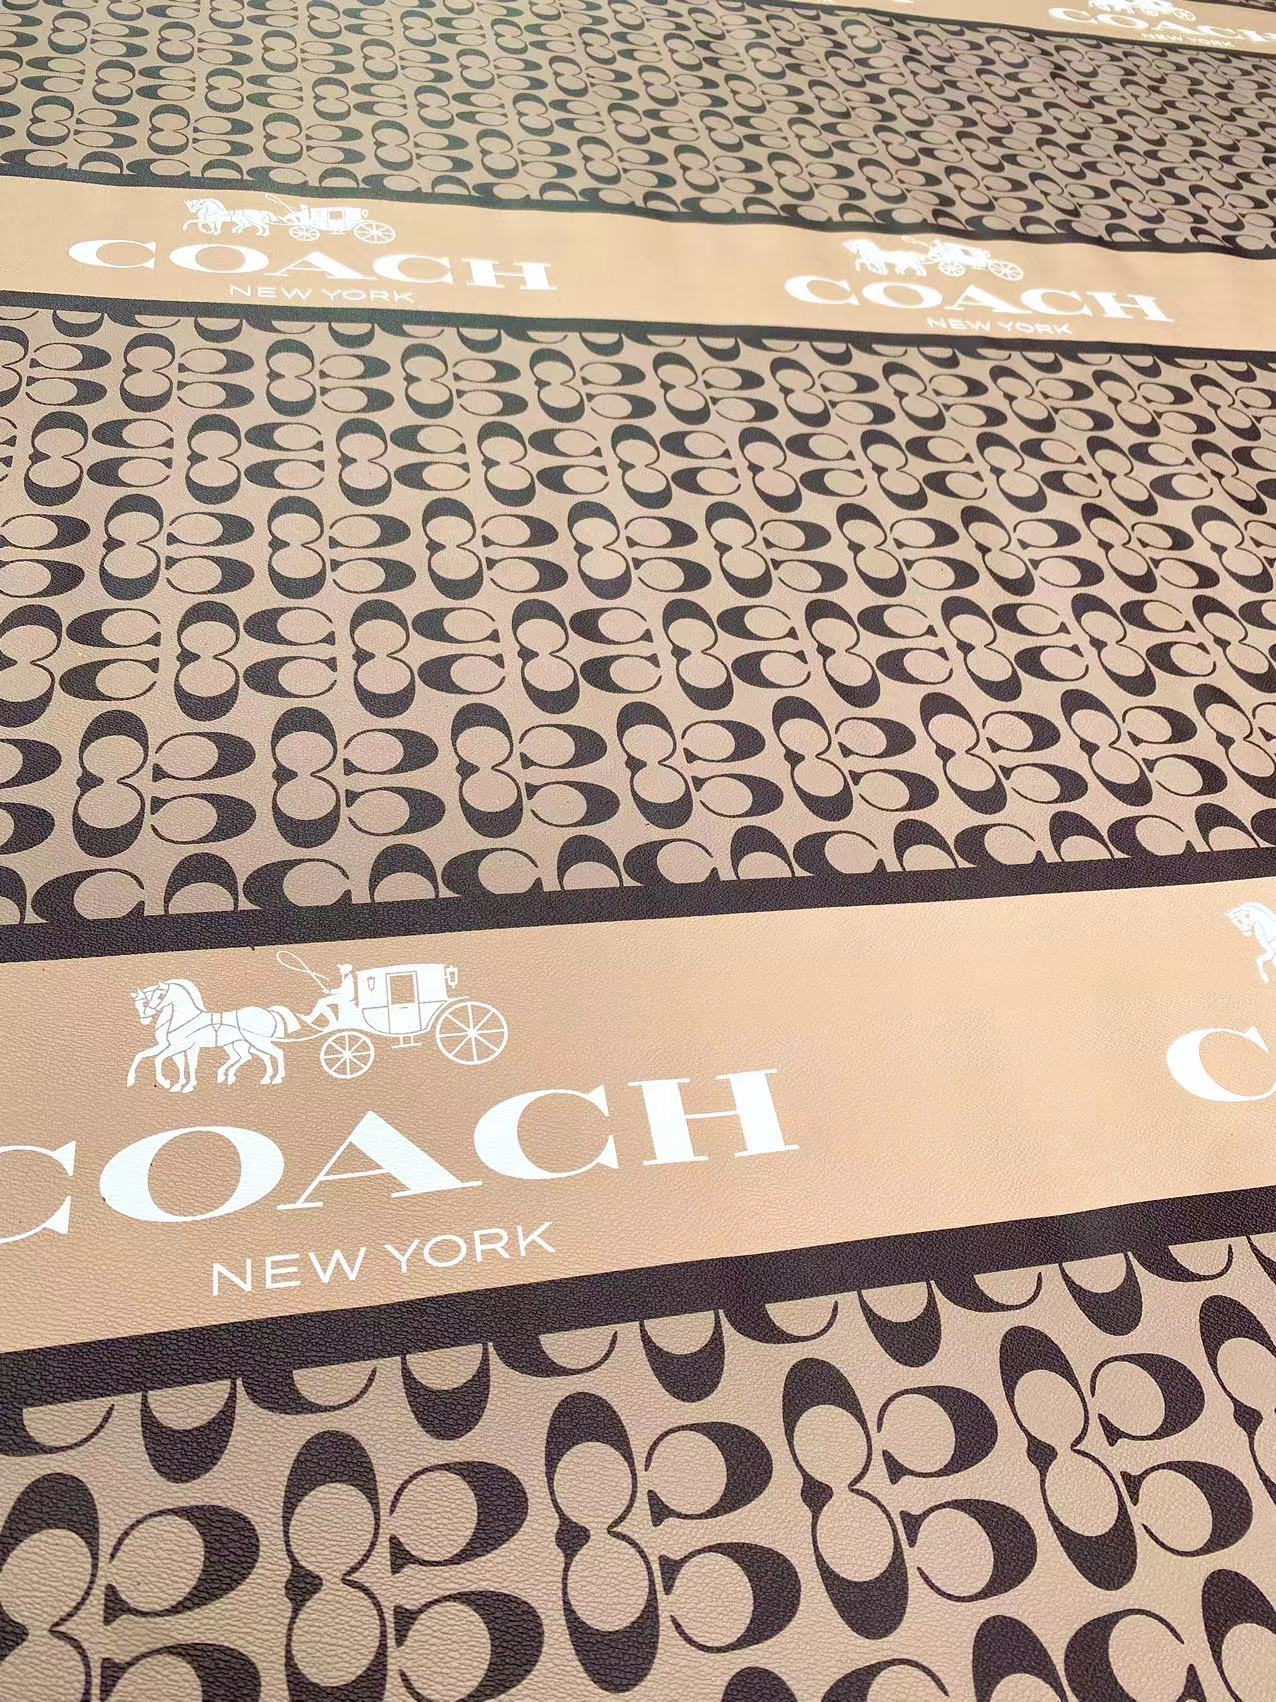 Classic Coach Logo Leather Vinyl Fabric for Handmade DIY Sewing Fabric